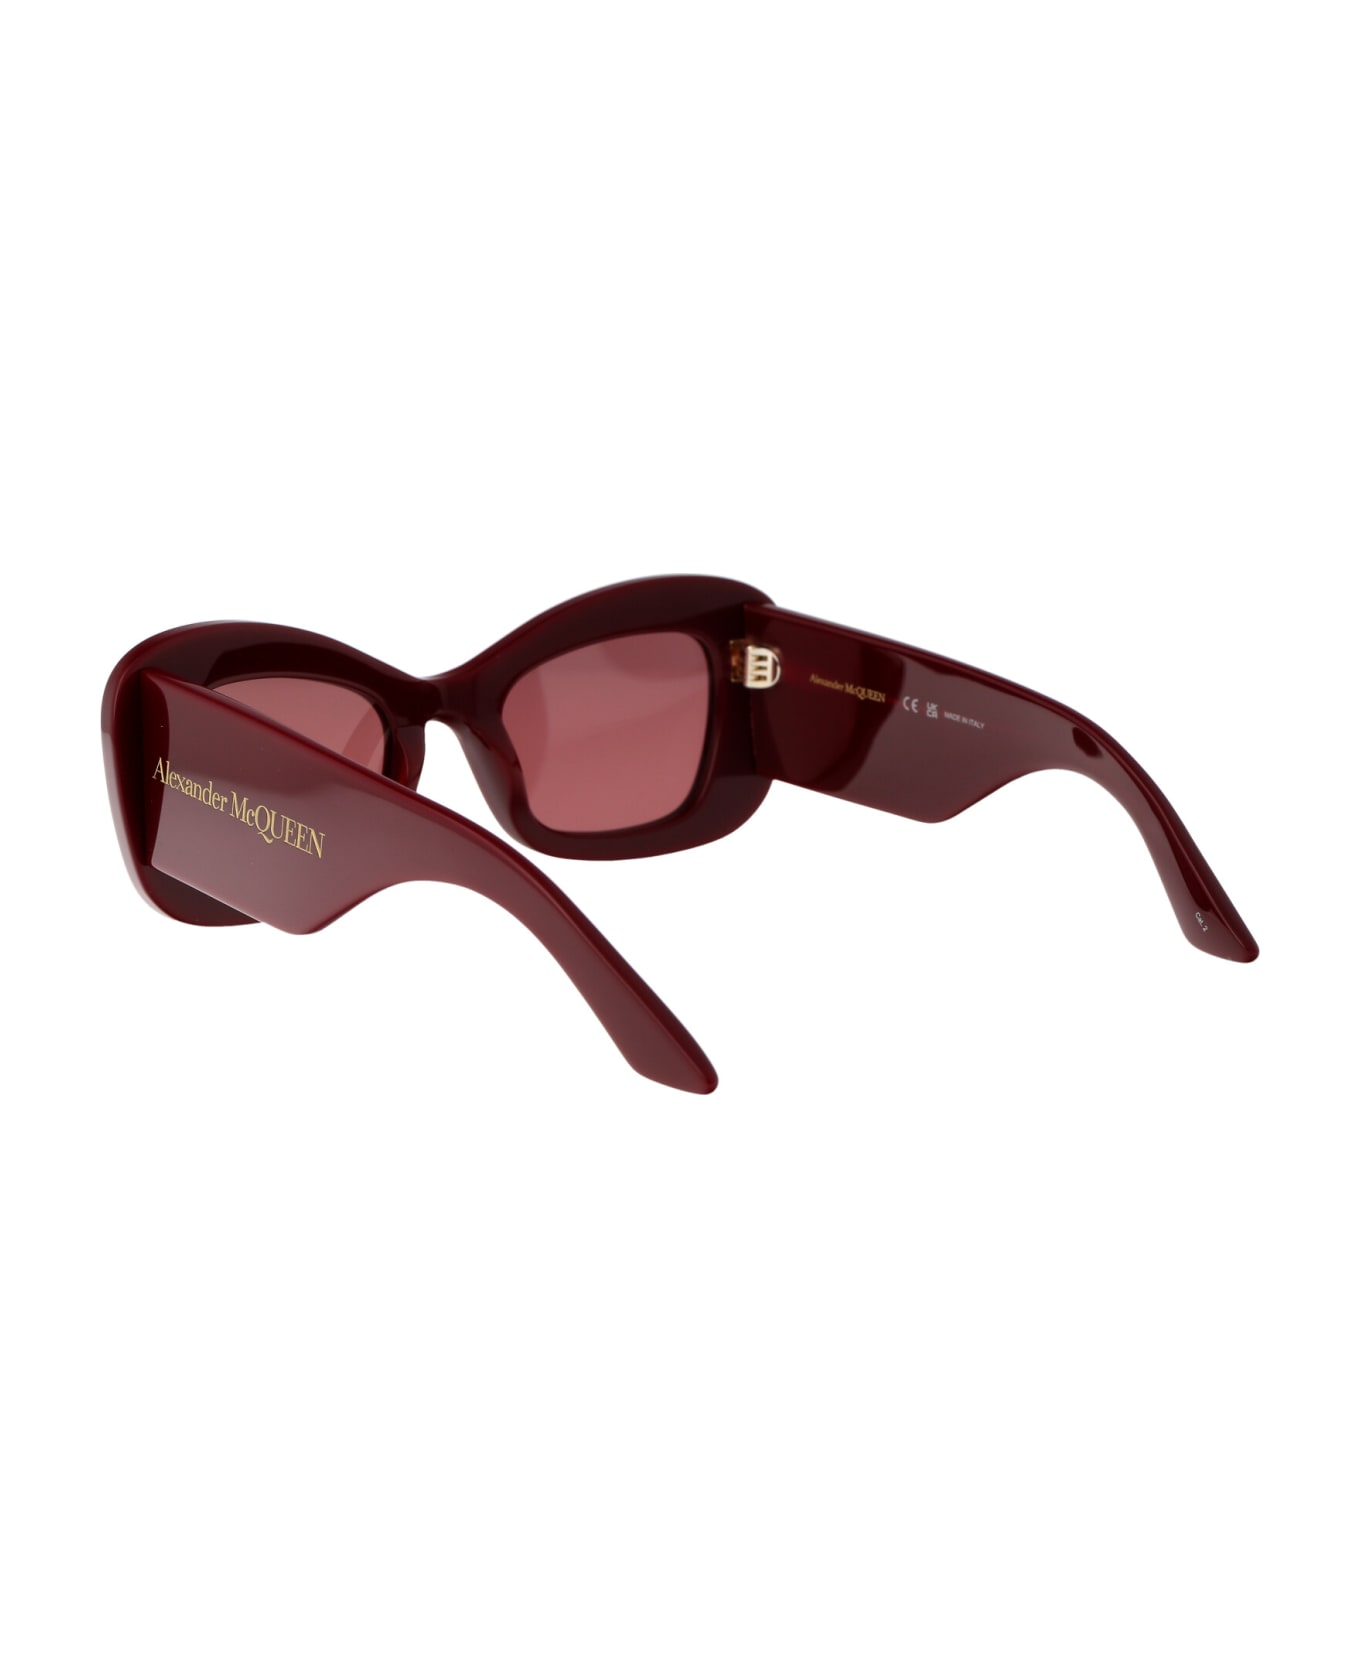 Alexander McQueen Eyewear Am0434s Sunglasses - 006 BURGUNDY BURGUNDY RED